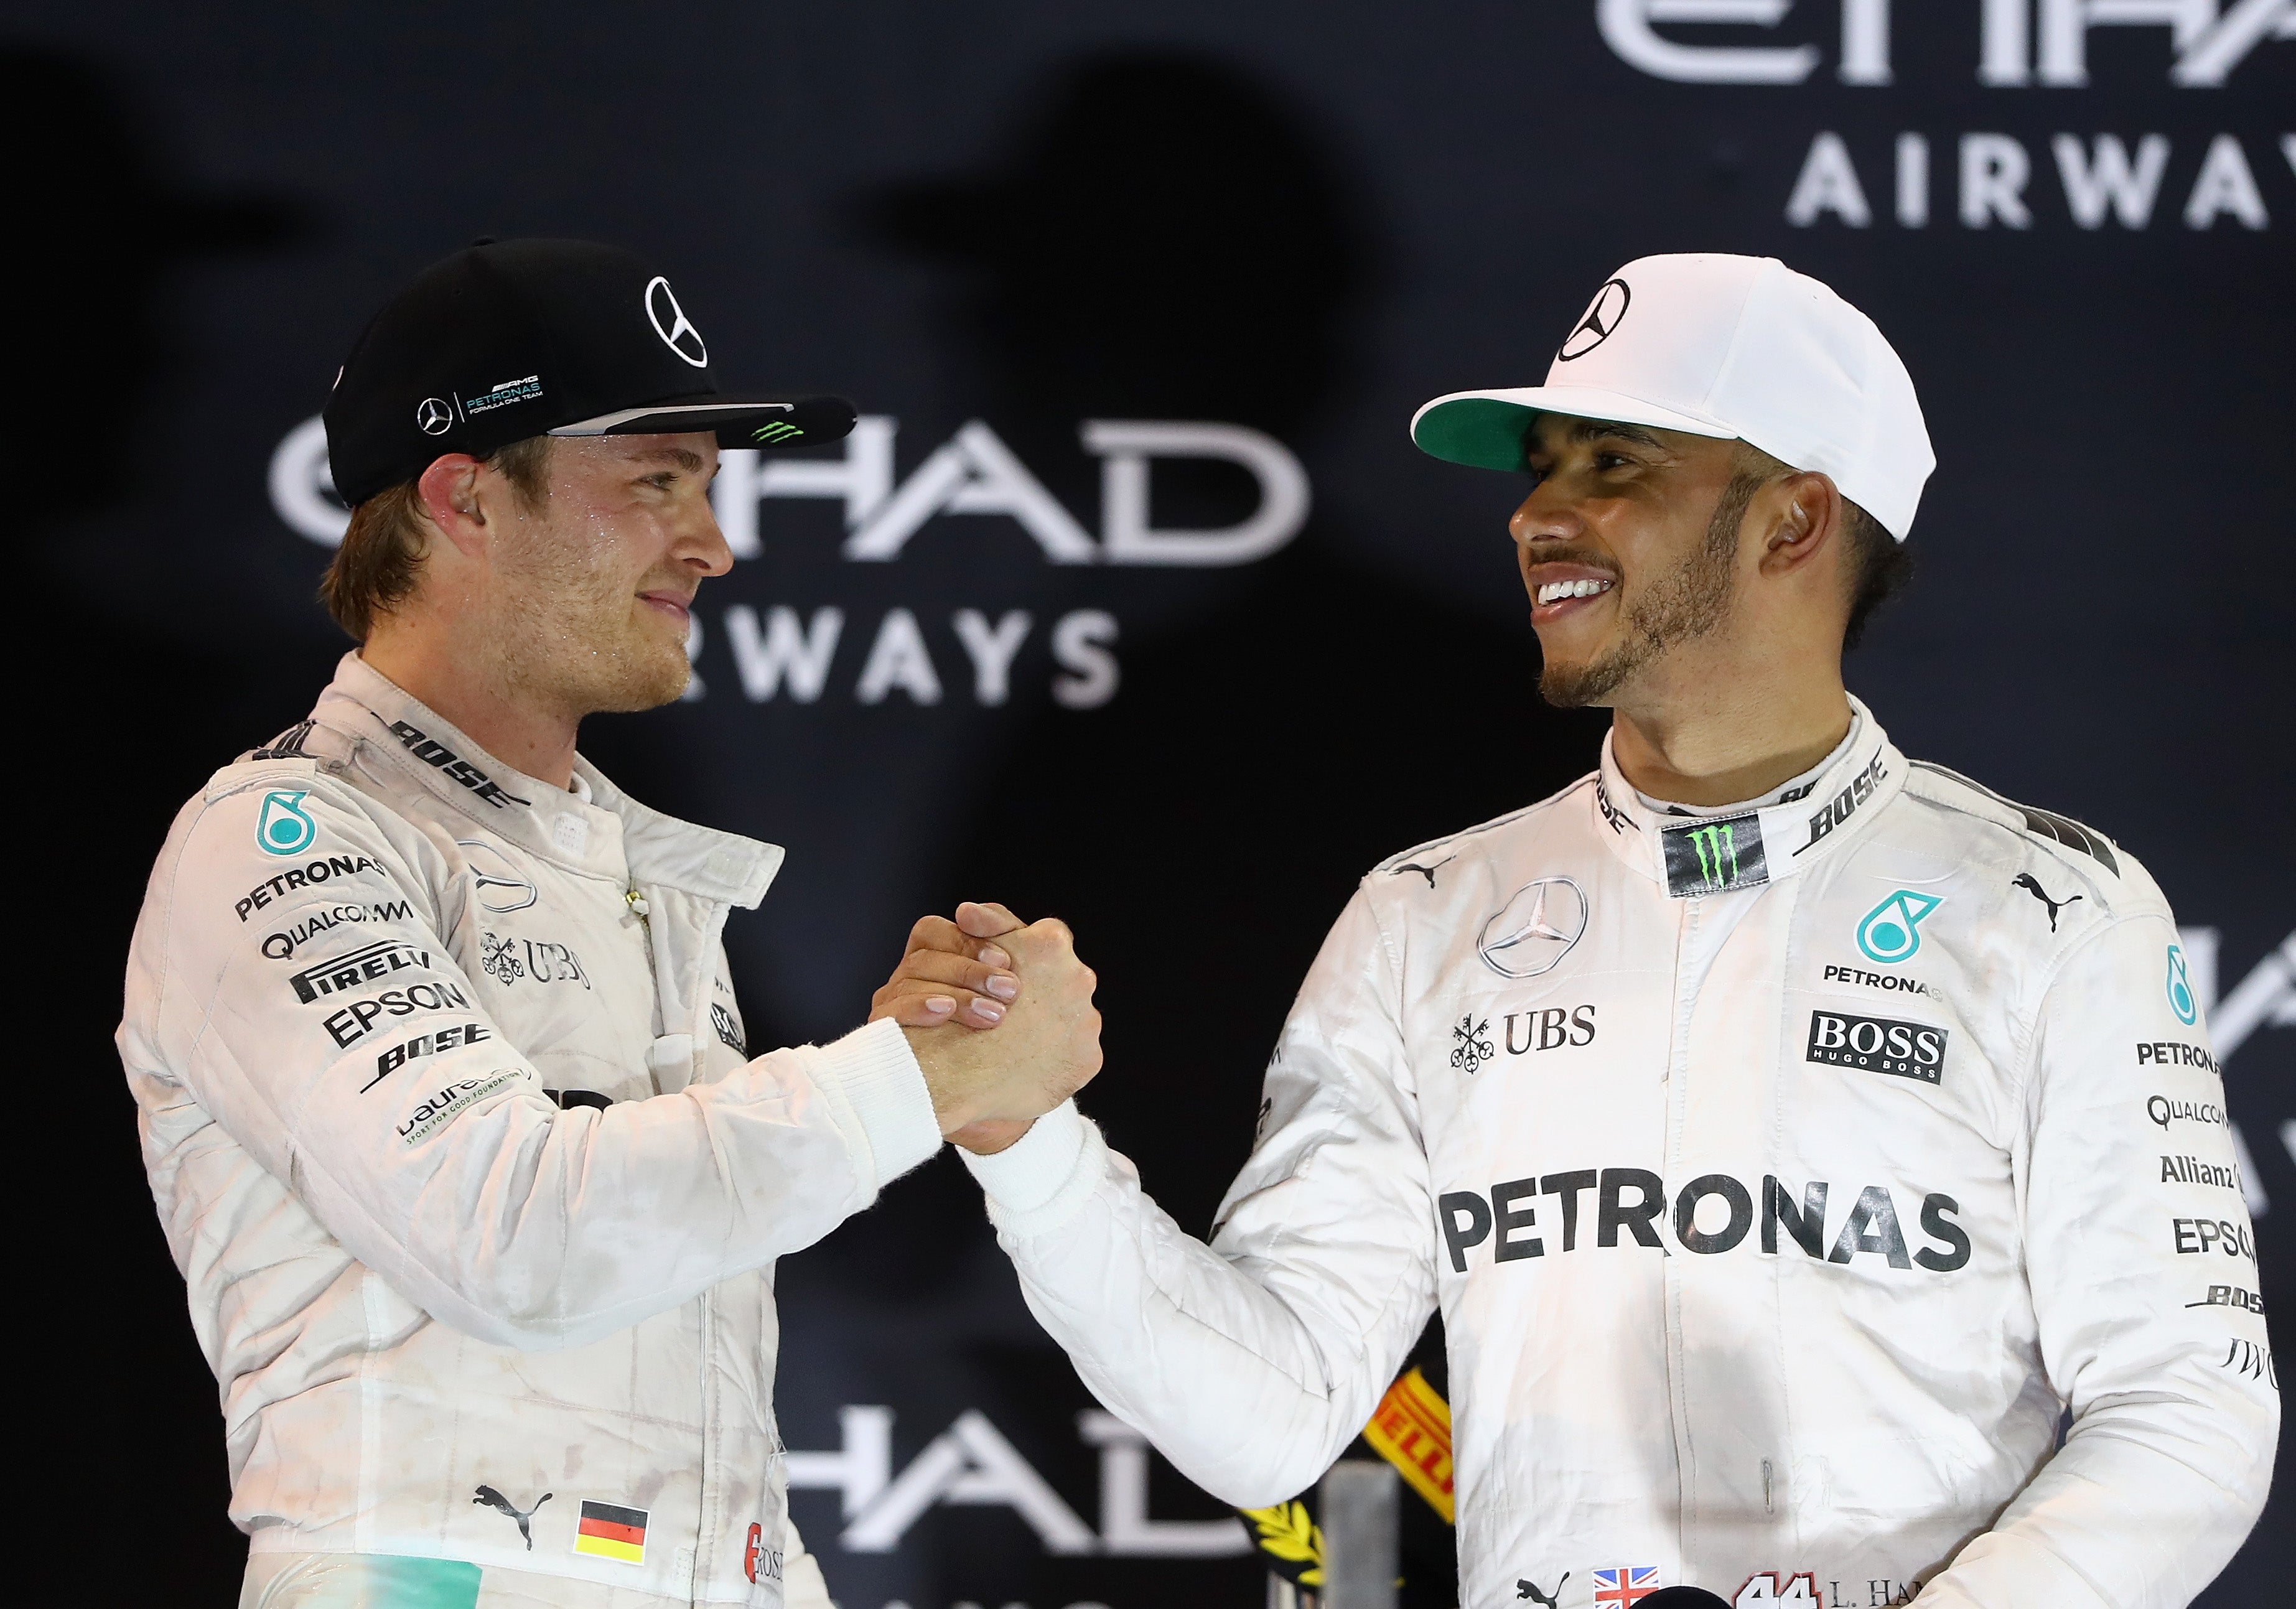 Lewis Hamilton and Nico Rosberg endured a fierce rivalry